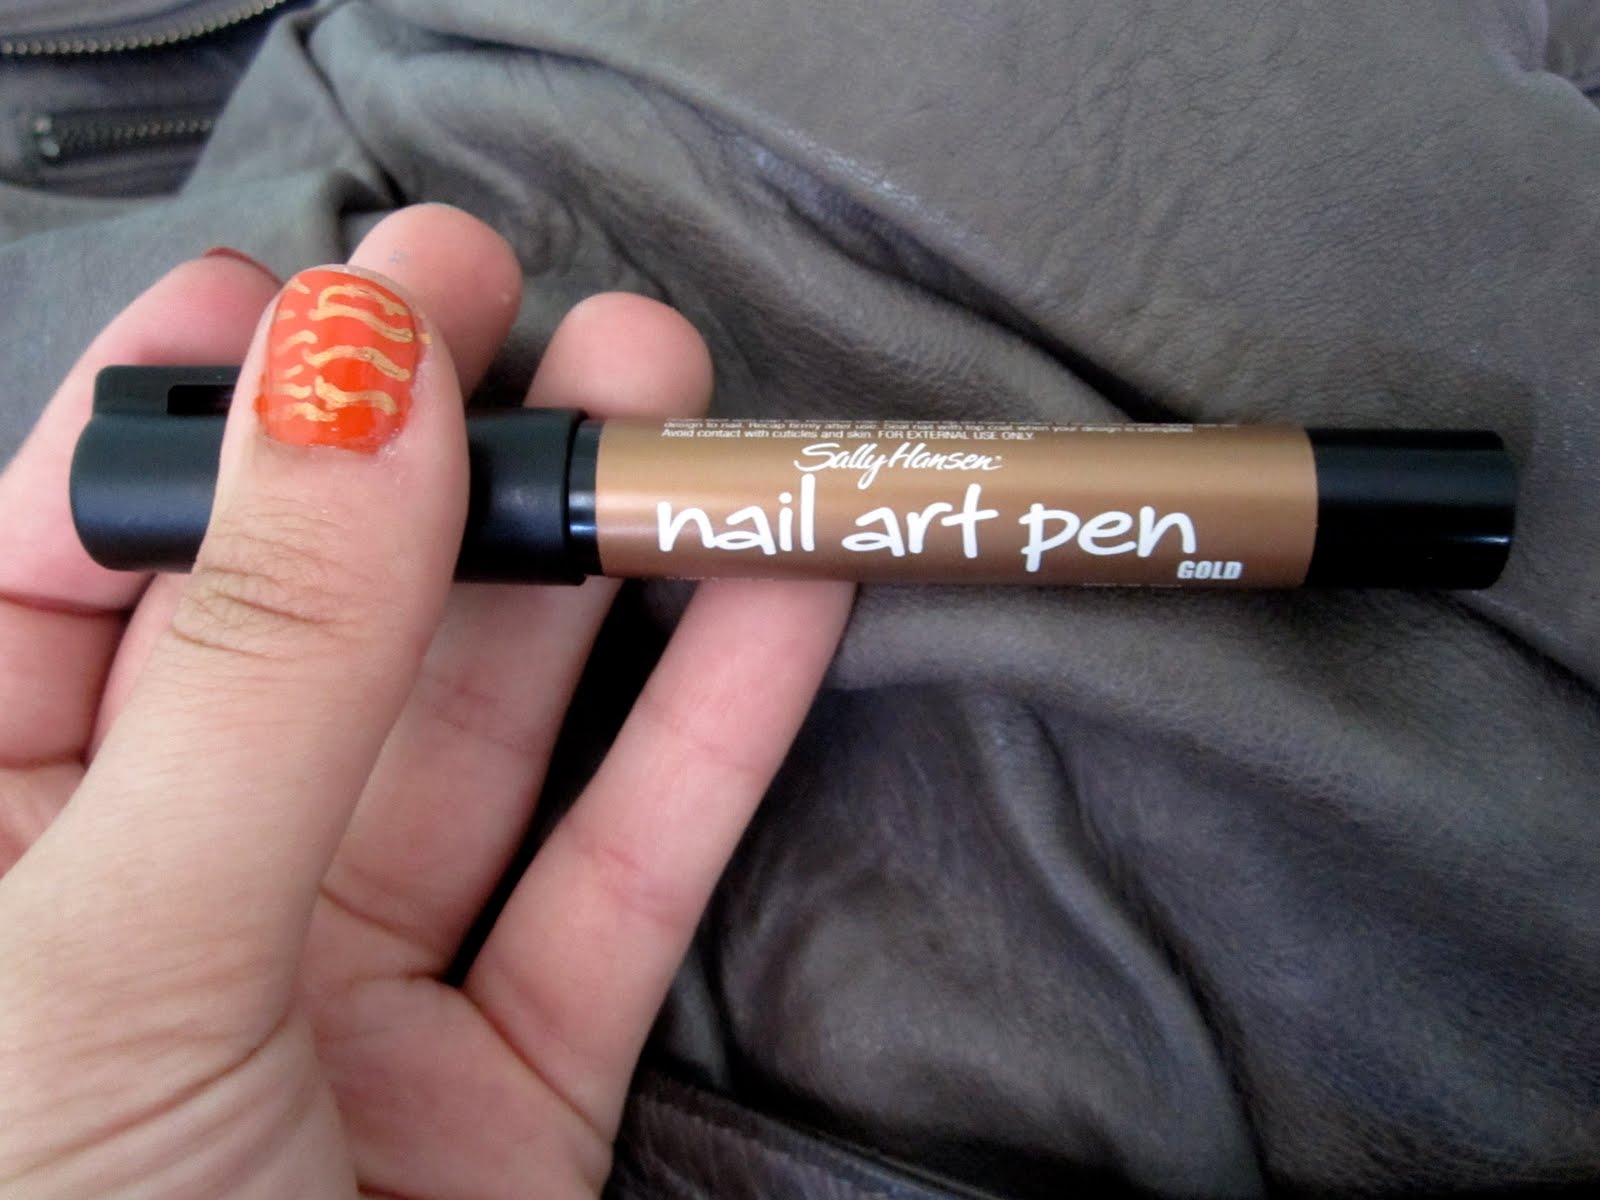 Sally Hansen Nail Art Pen on Skin: Tips and Tricks - wide 4